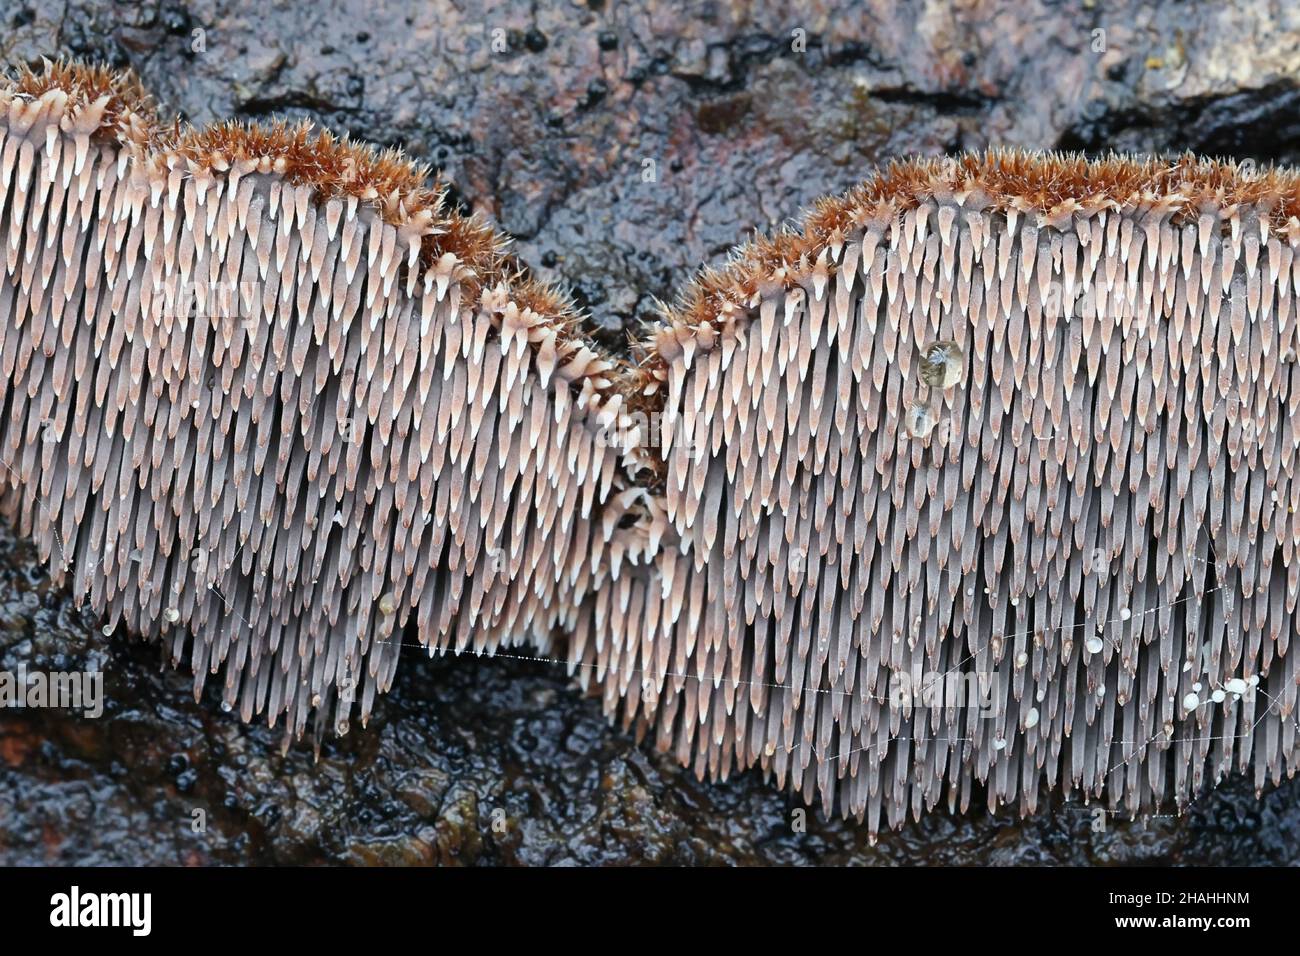 Gloiodon strigosus, a tooth fungus from Finland, no common English name Stock Photo